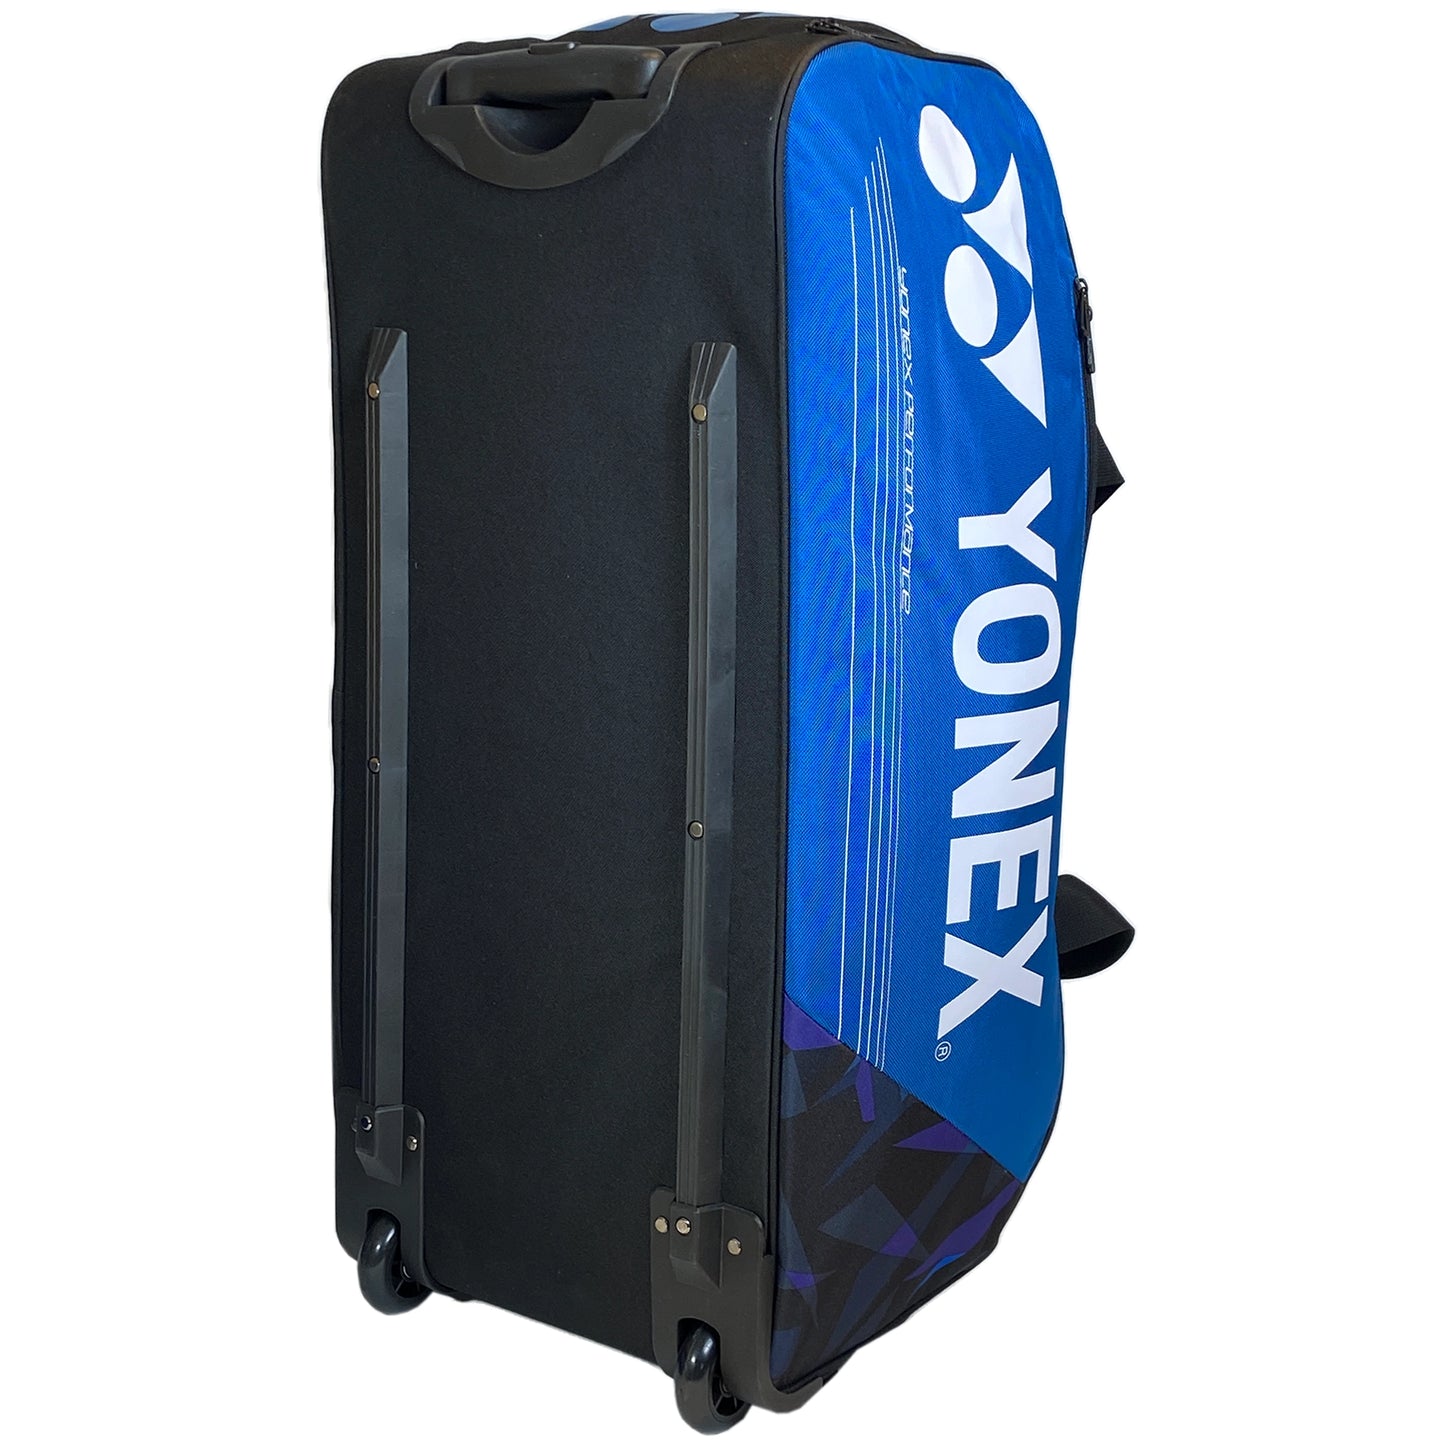 Yonex Pro Trolley Bag (BA92232EX) Fine Blue